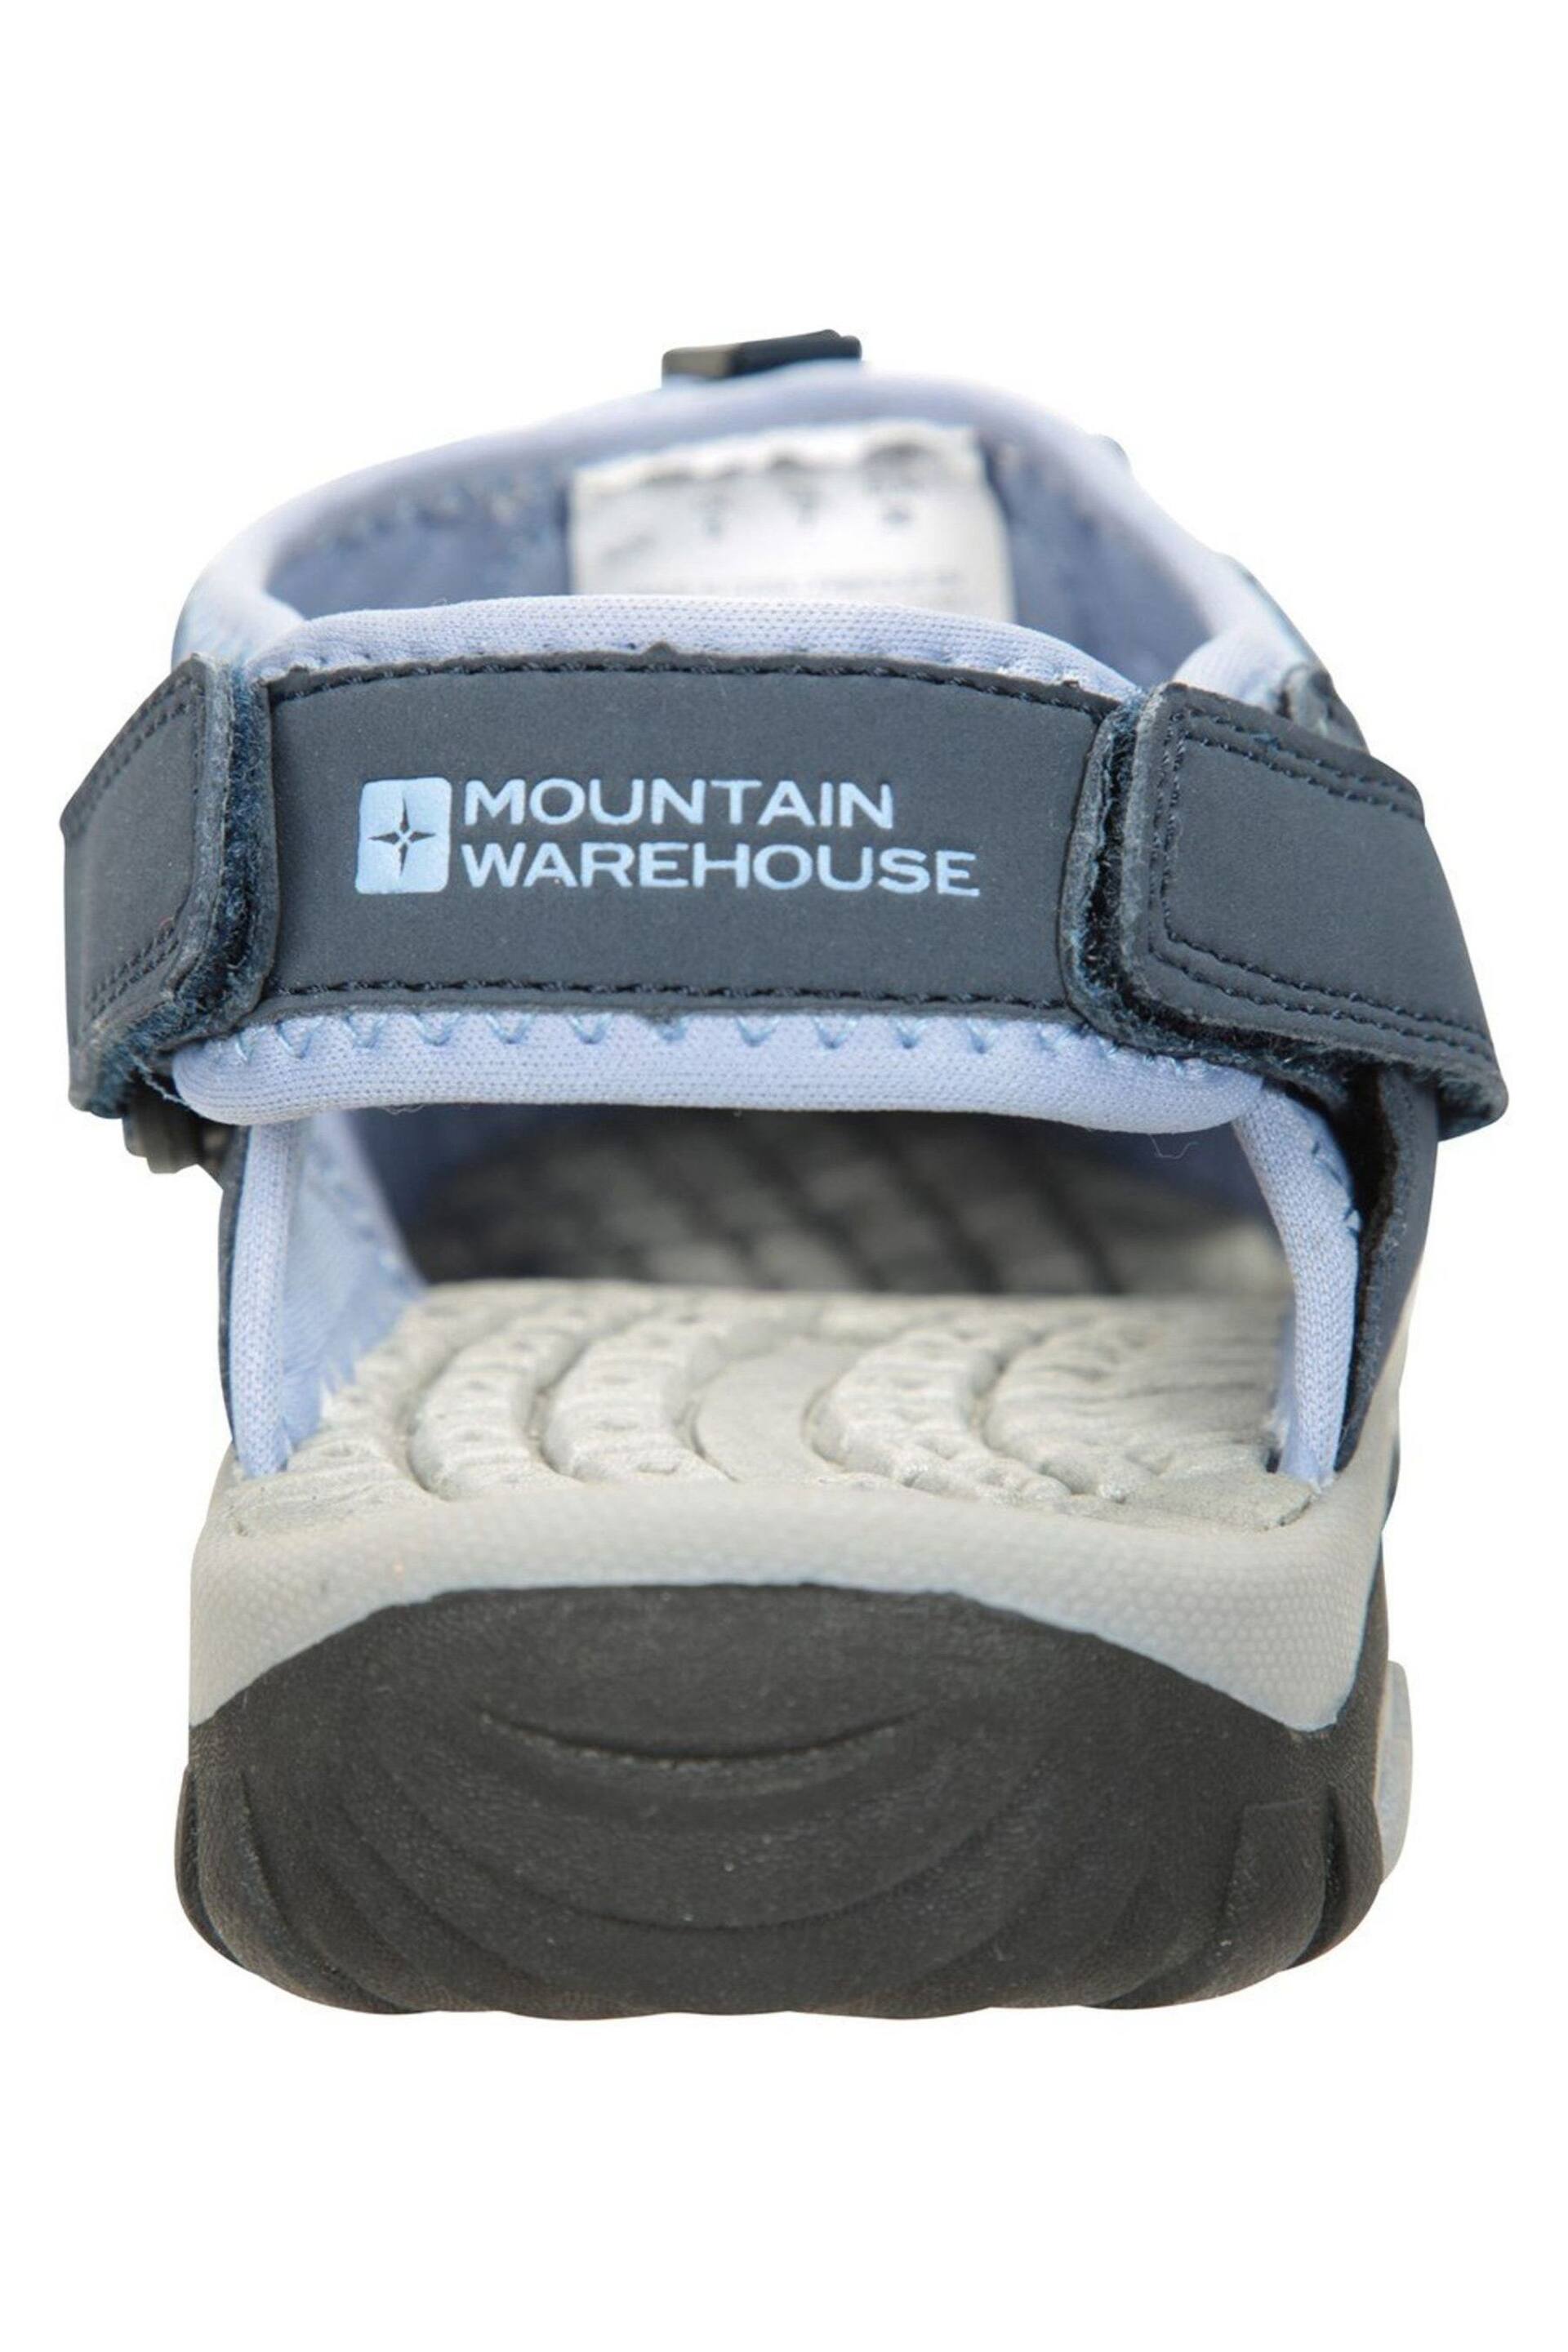 Mountain Warehouse Blue Womens Trek Comfort Shandals - Image 4 of 4